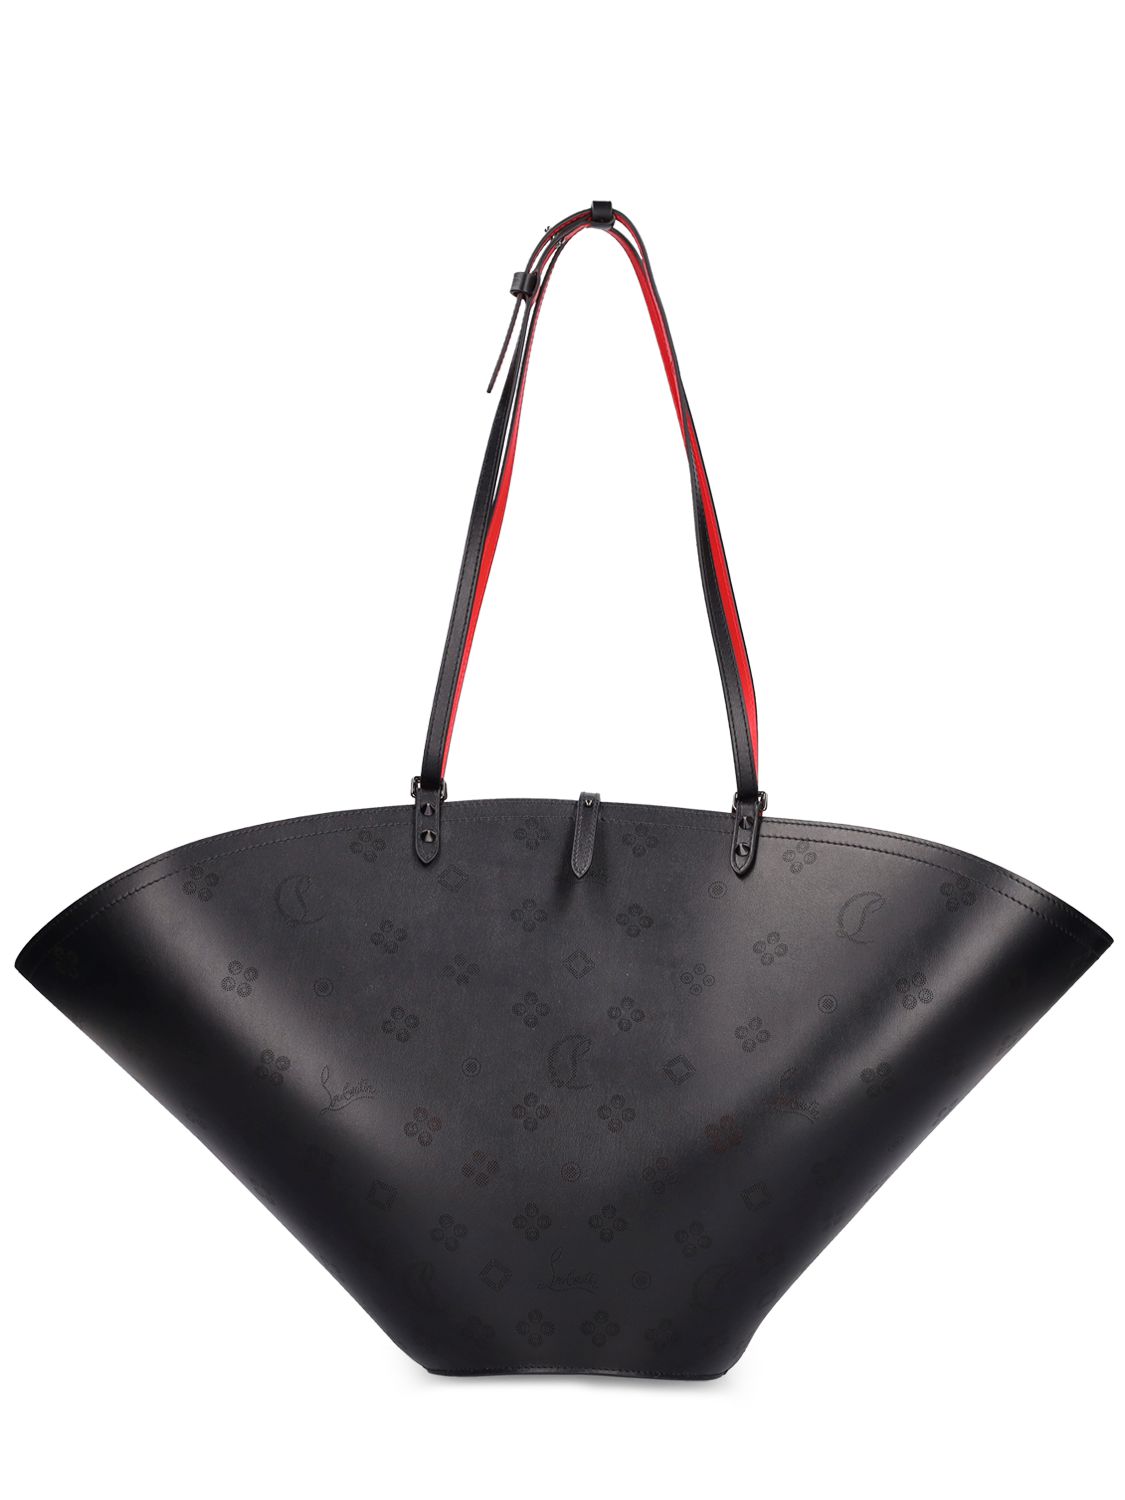 Loubifever Paris Leather Tote Bag